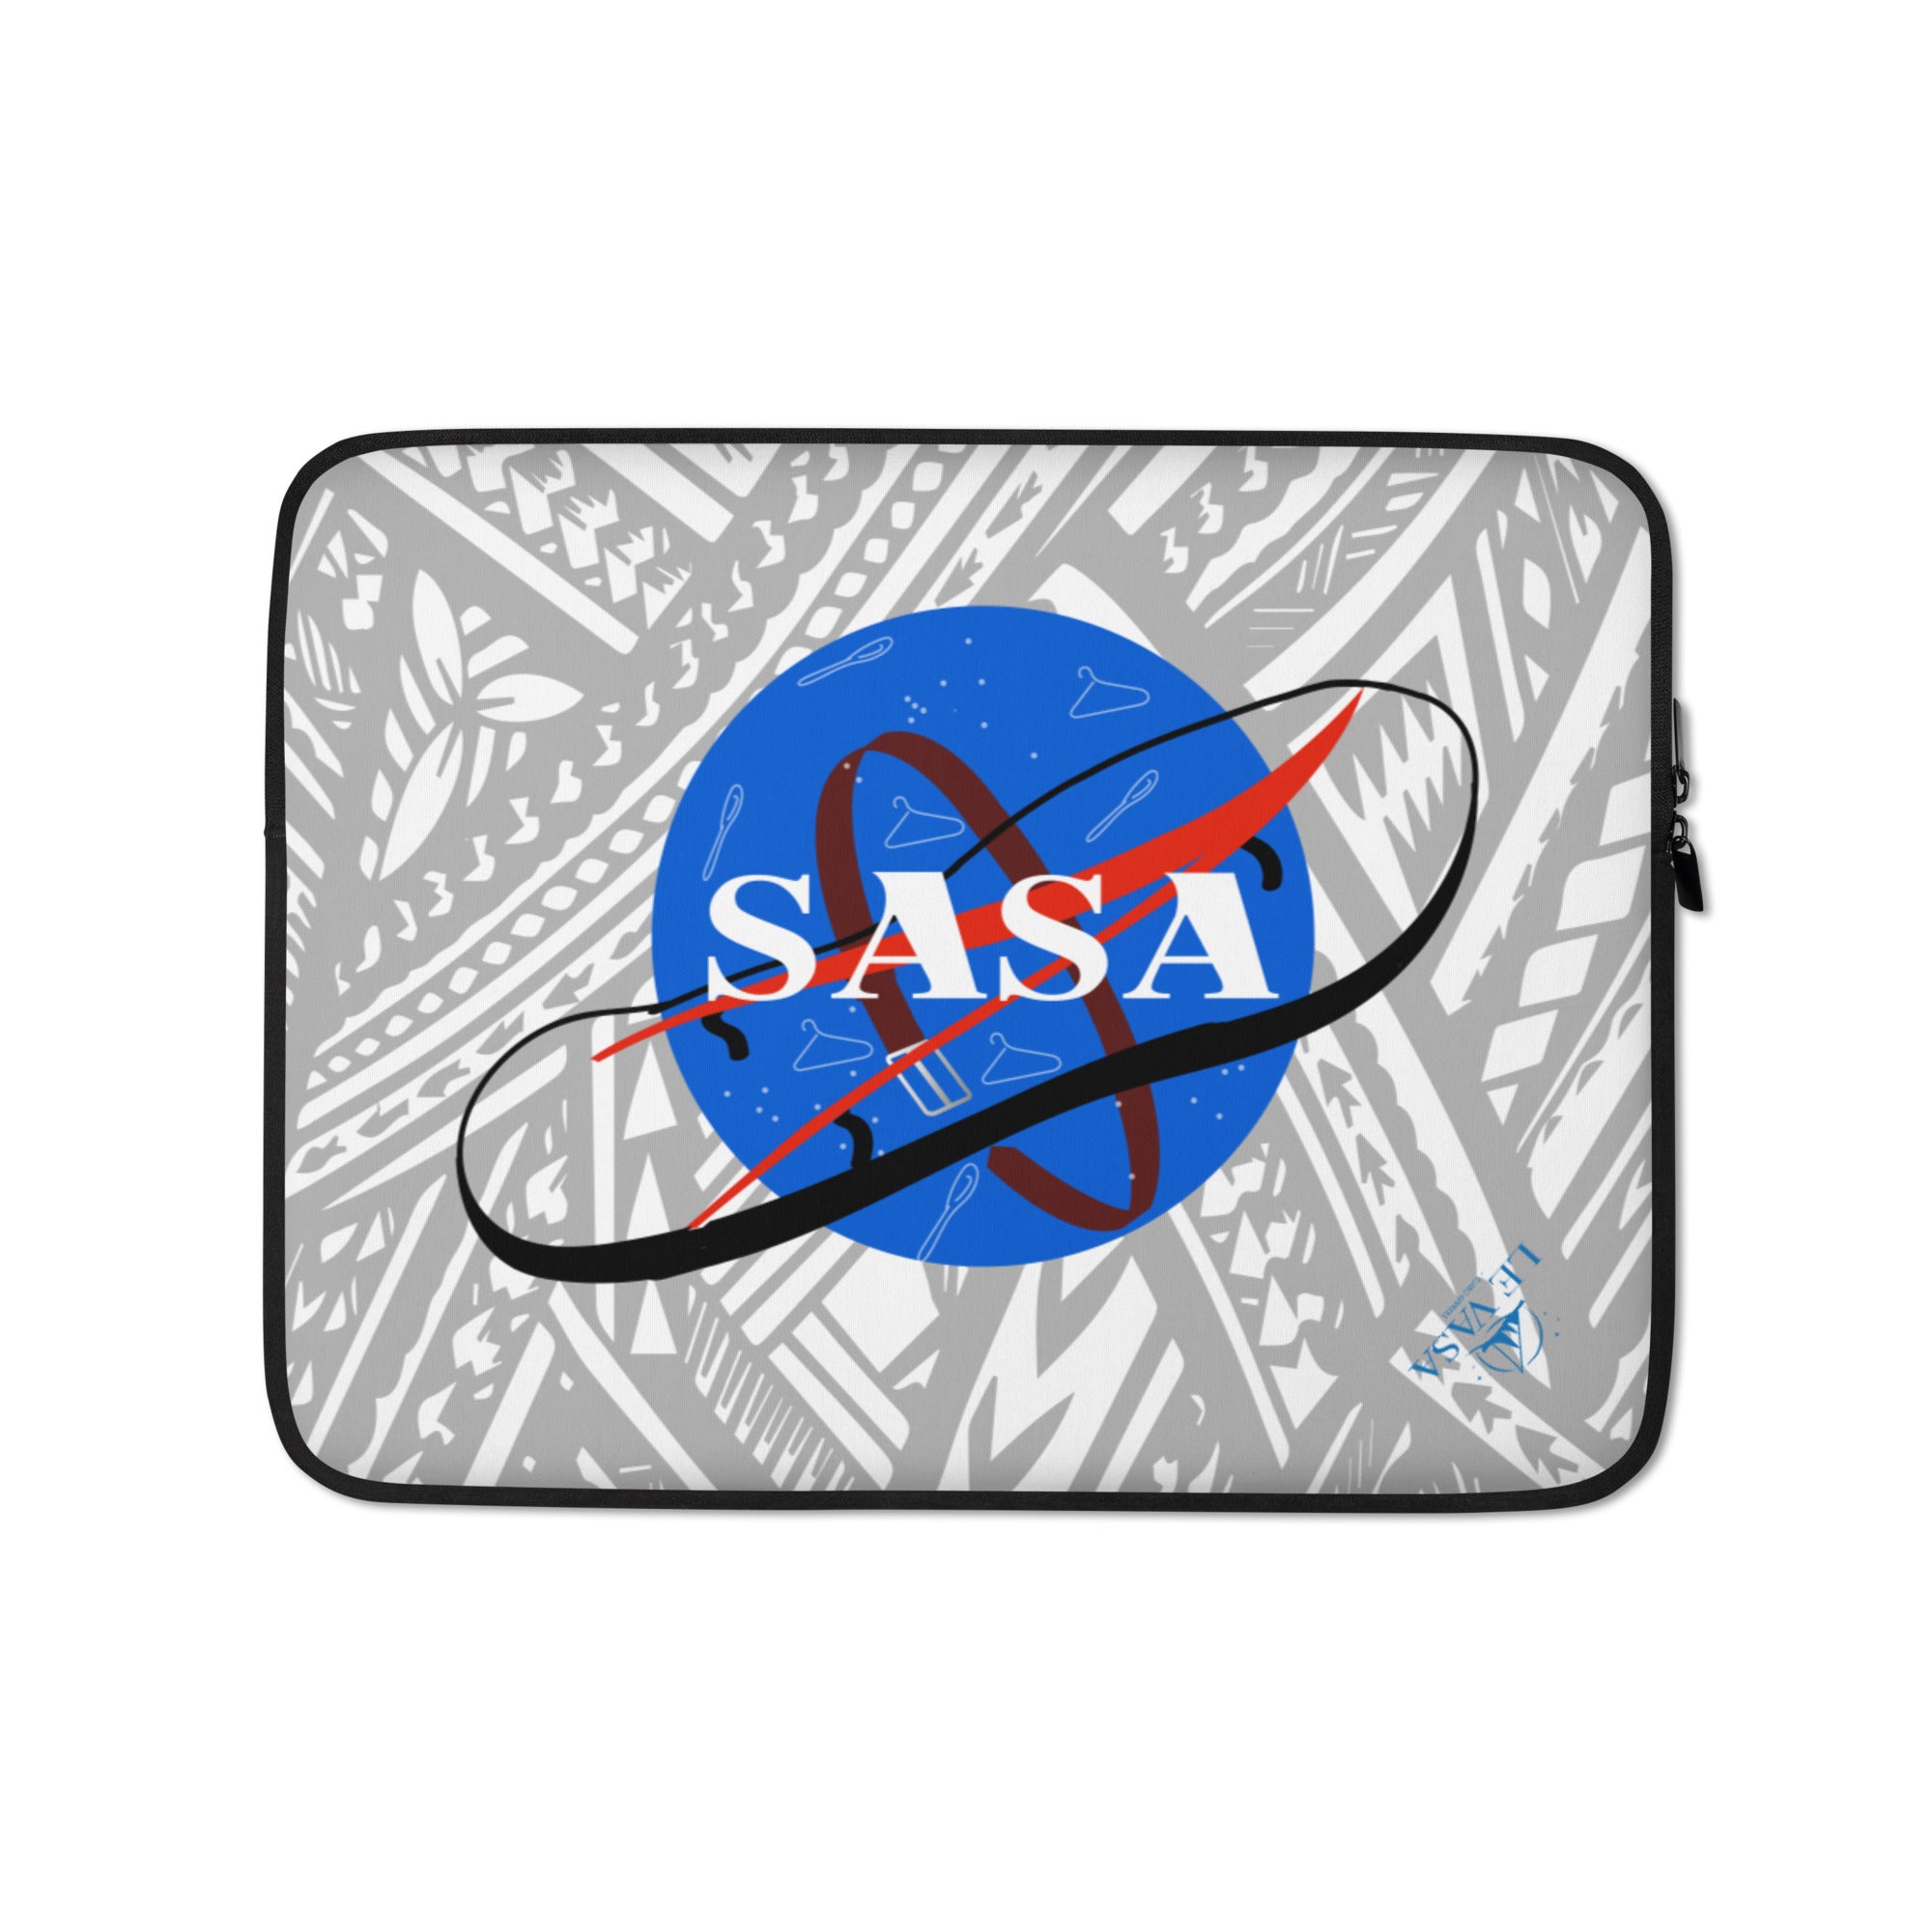 Le SASA (laptop case)